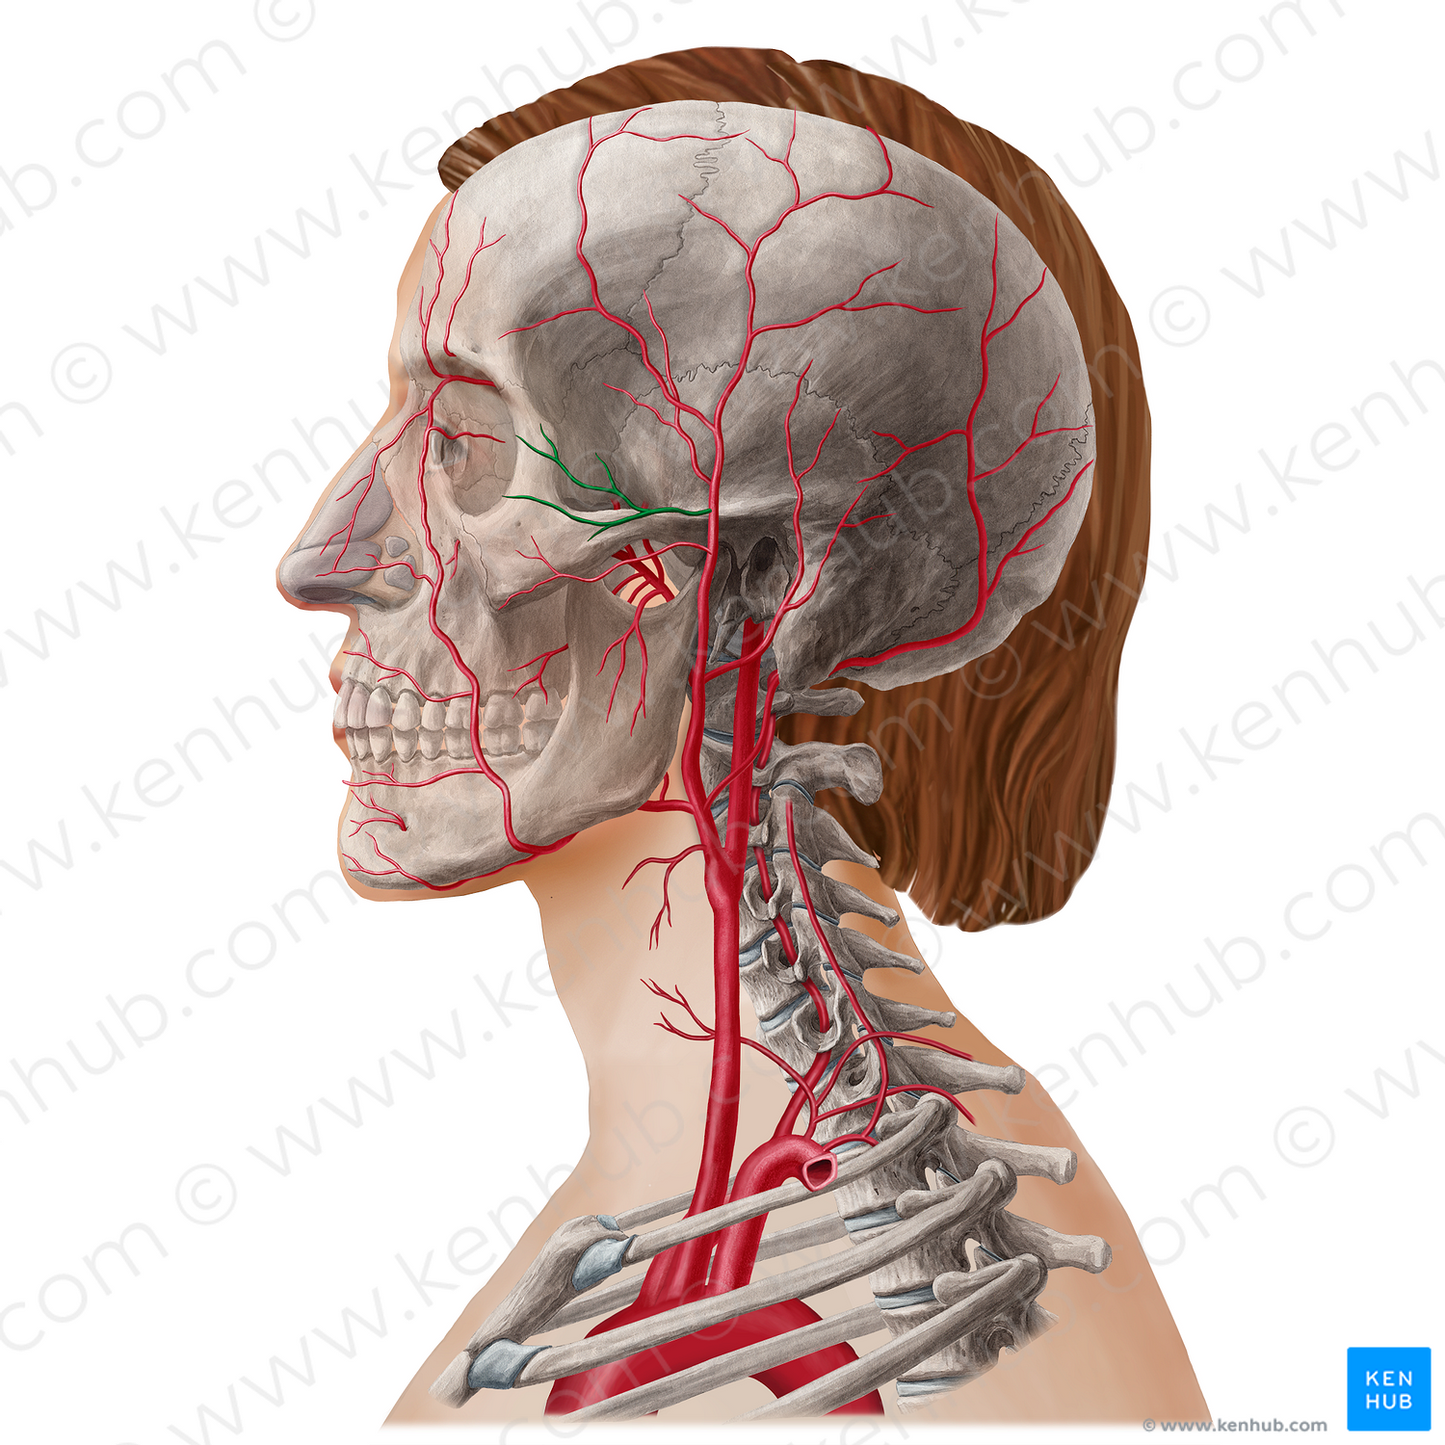 Zygomaticoorbital artery (#21815)